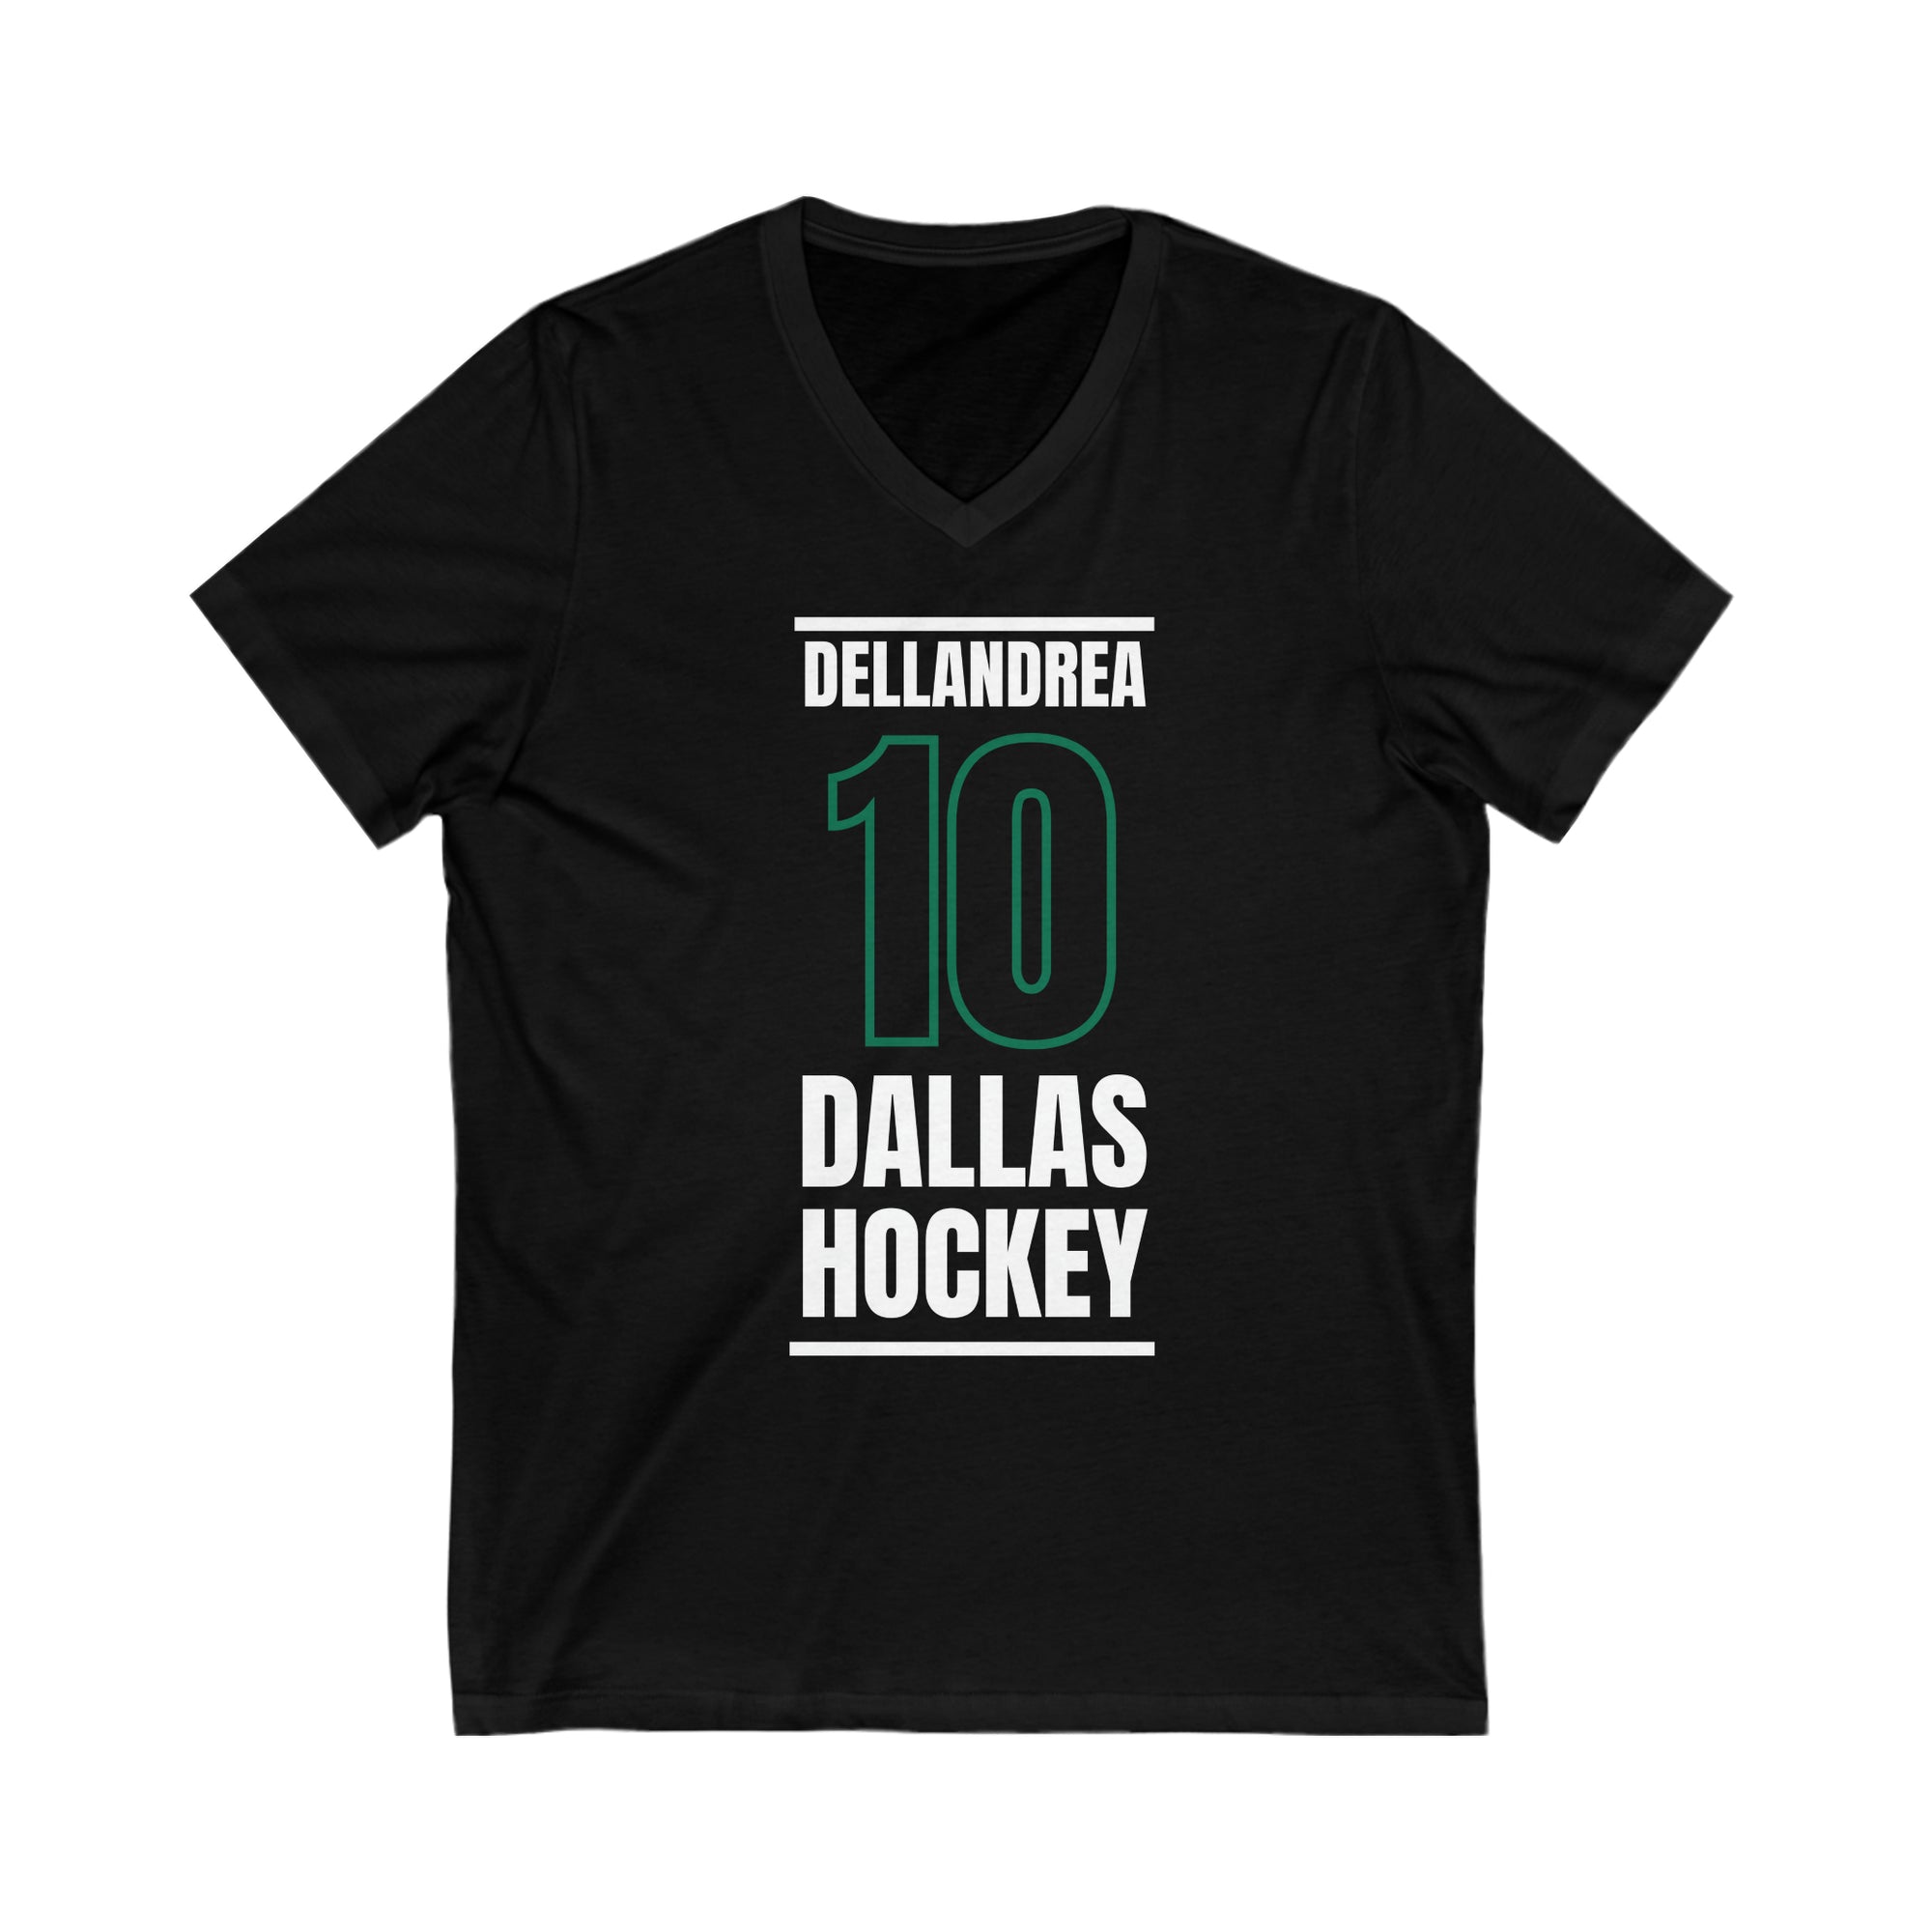 Dellandrea 10 Dallas Hockey Black Vertical Design Unisex V-Neck Tee